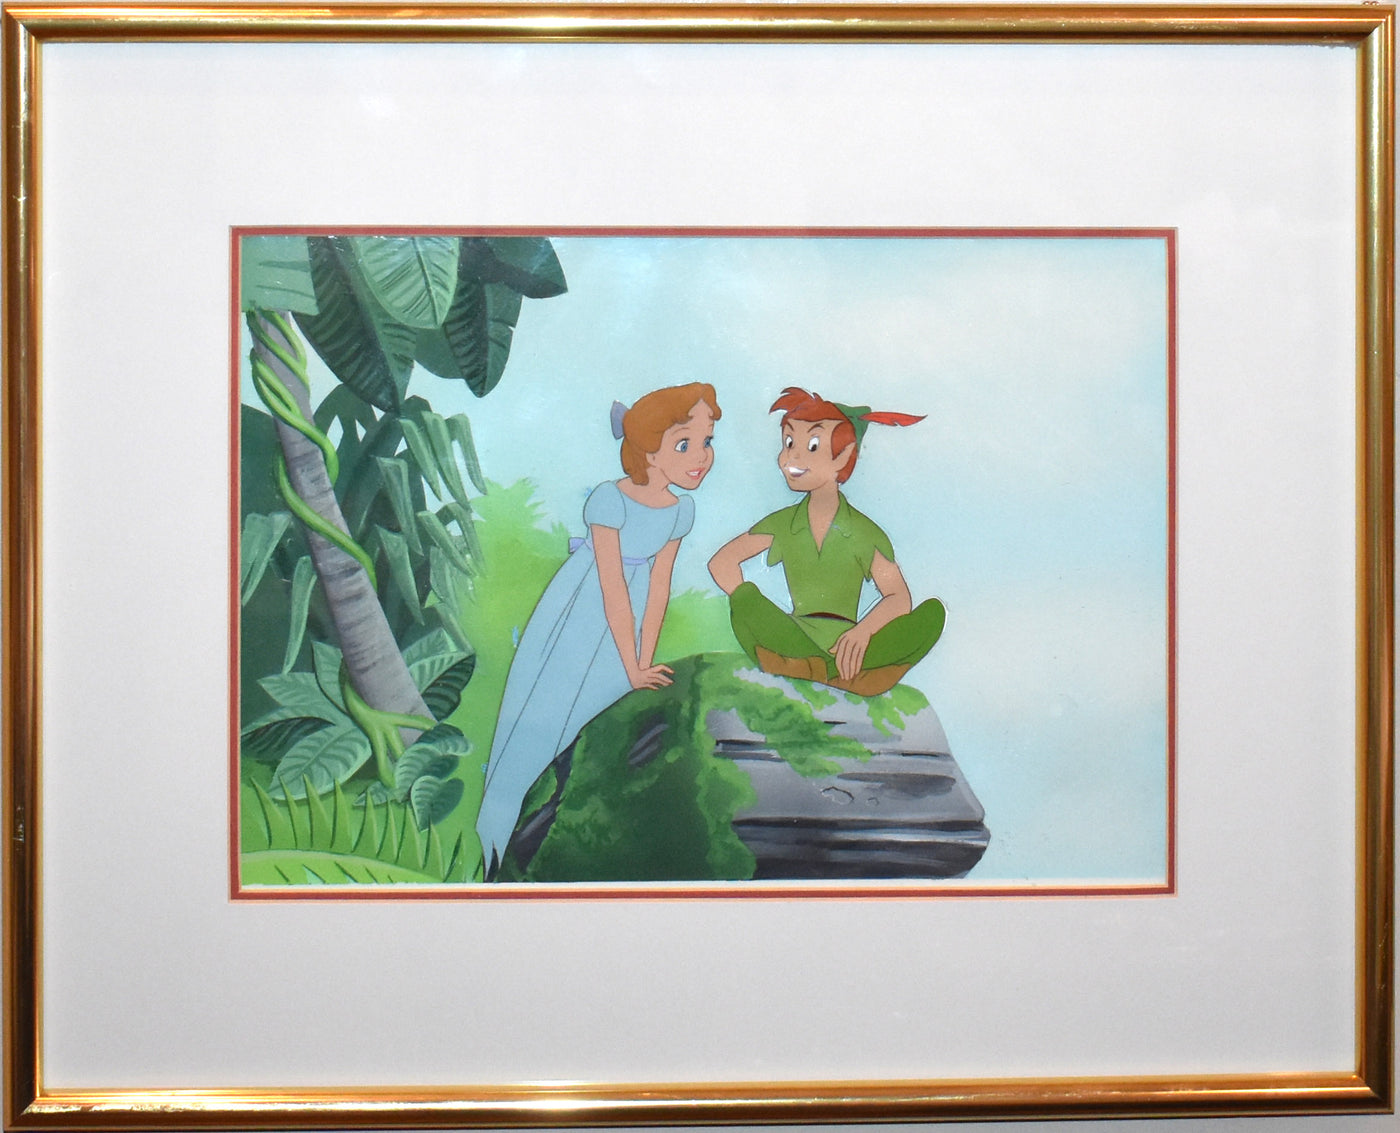 Original Walt Disney Production Cel featuring Peter Pan and Wendy